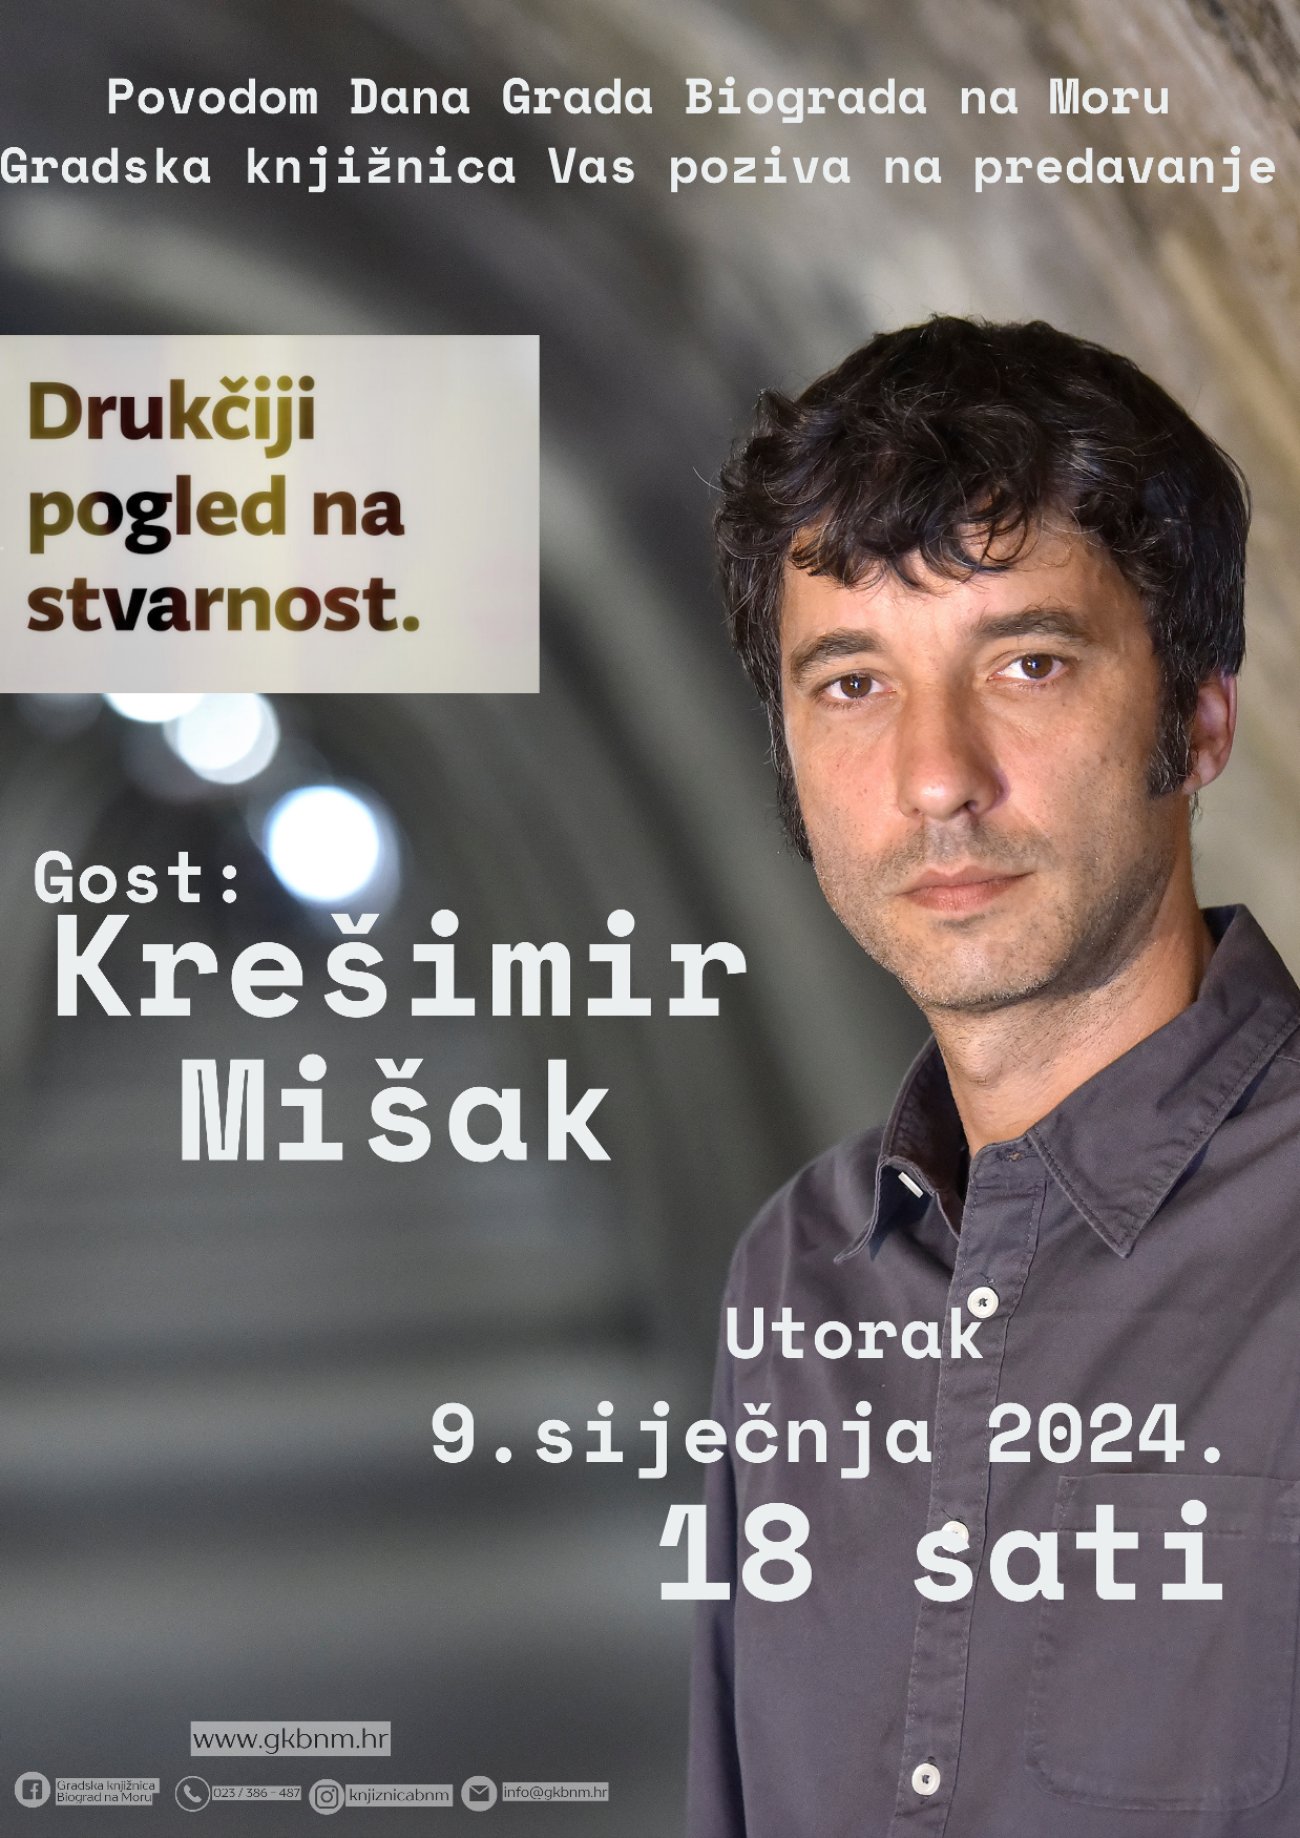 &#039;Drukčiji pogled na stvarnost&#039;: Krešimir Mišak gostuje u Biogradu povodom Dana Grada